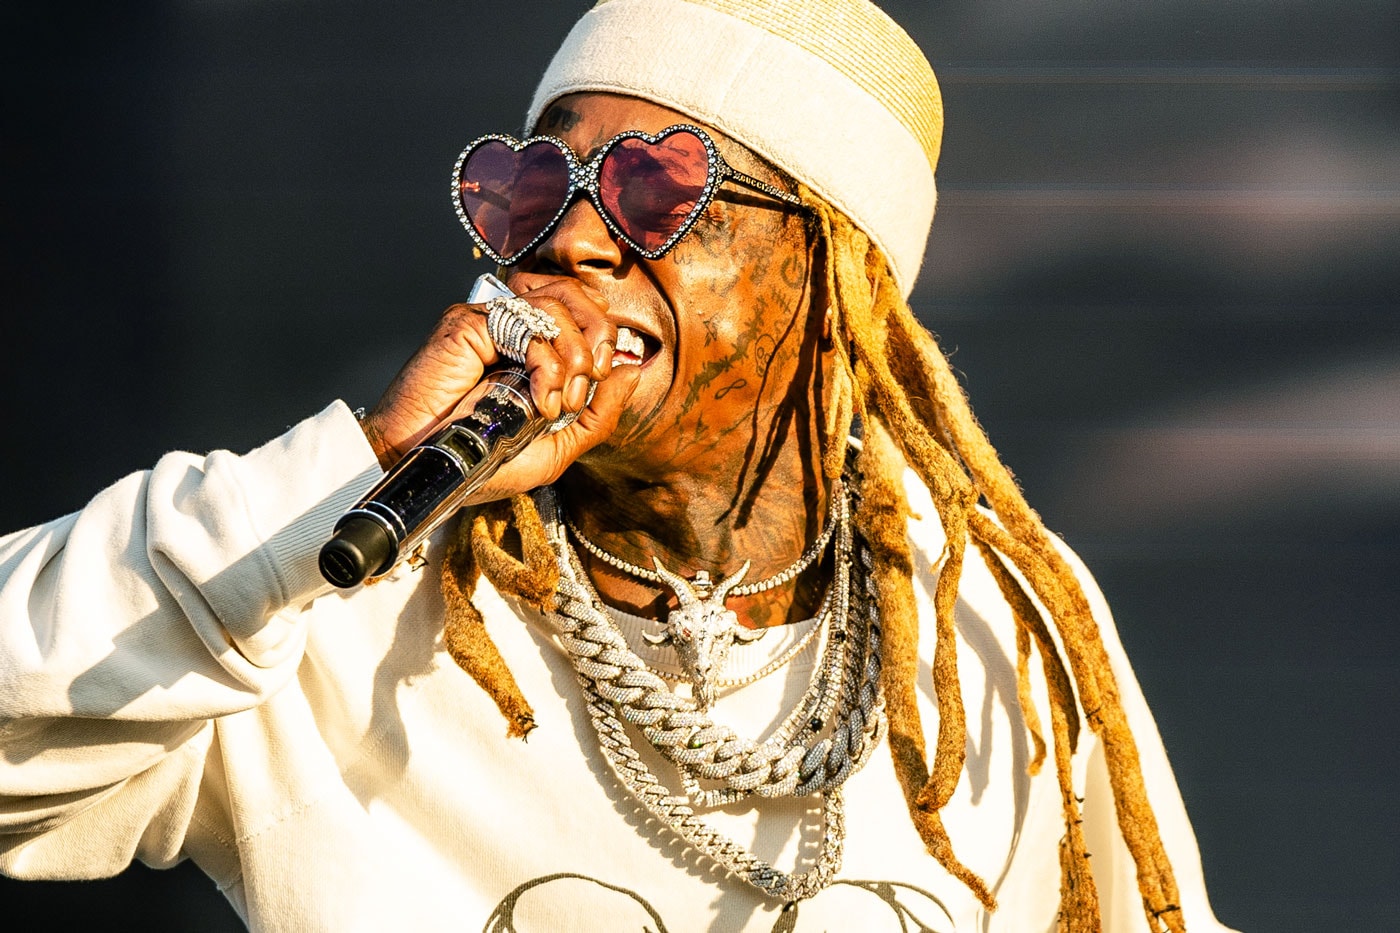 Young Thug Denies Having Beef With Lil Wayne